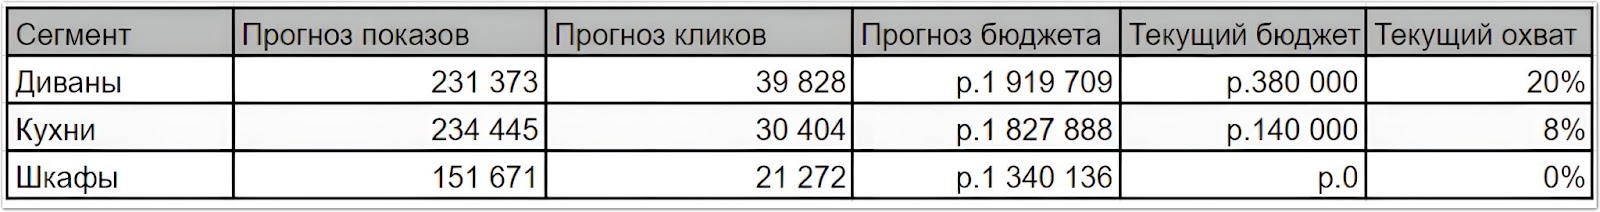 Прогноз Яндекс Директа